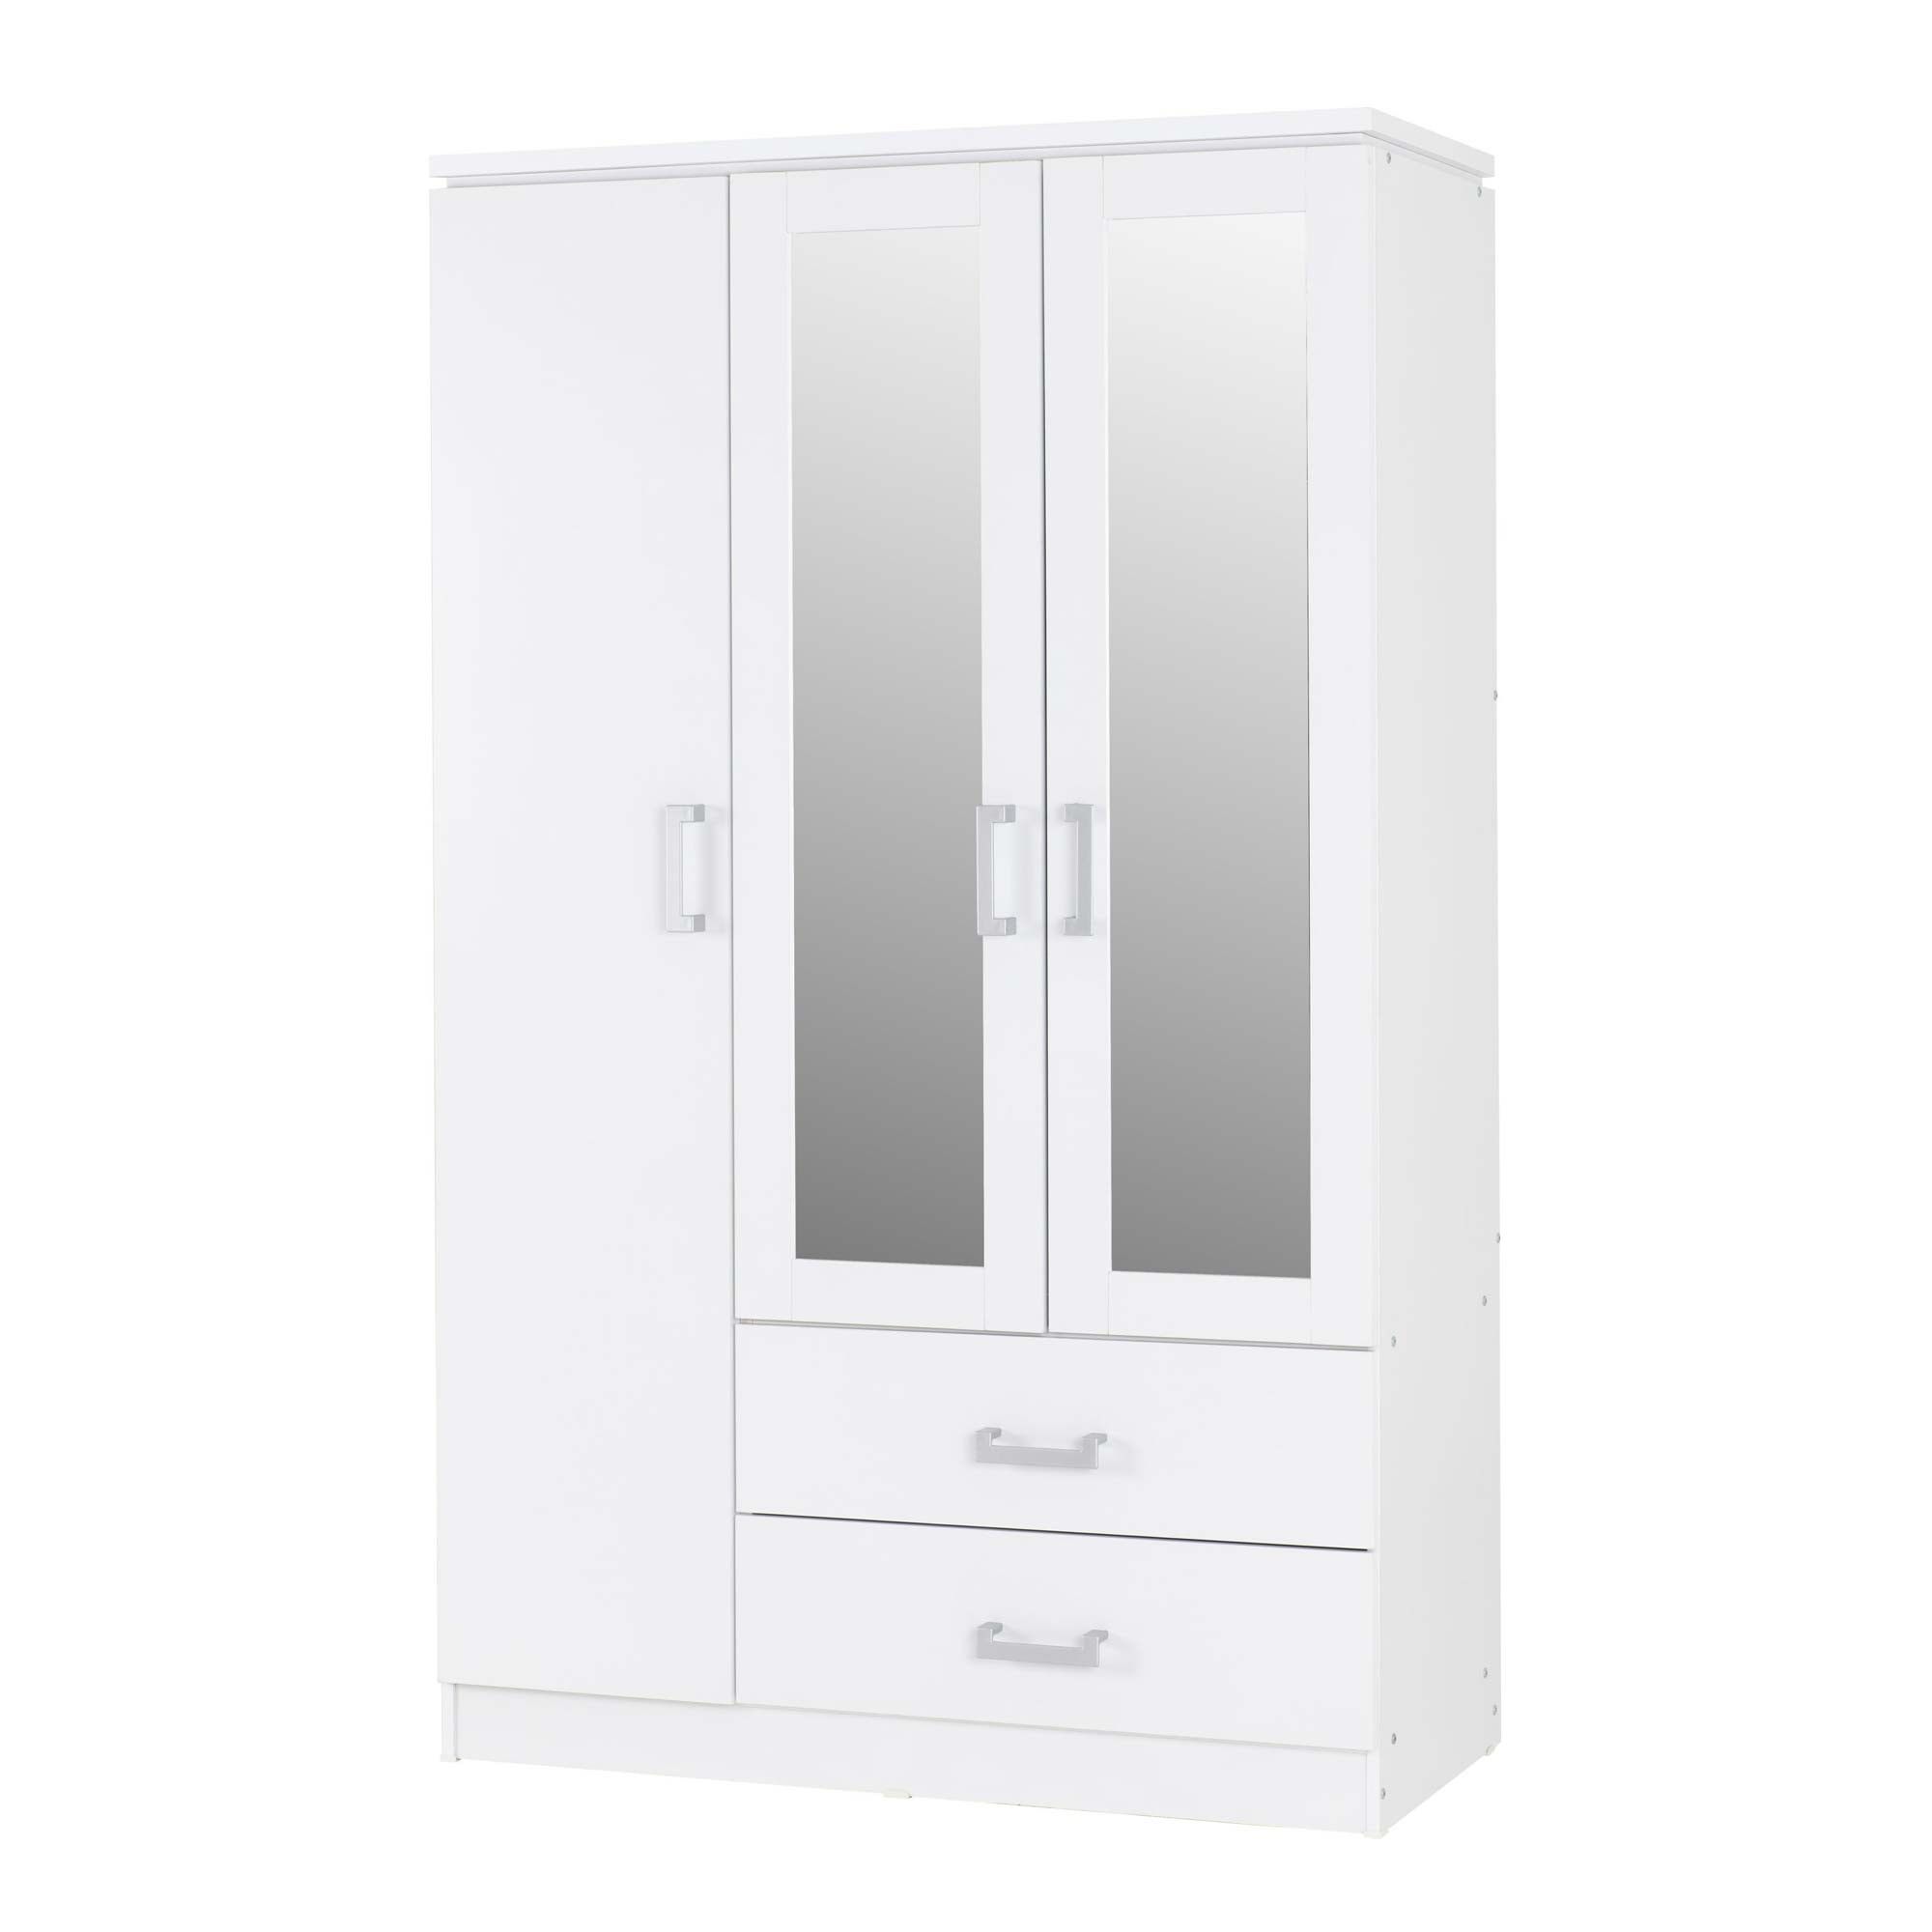 Charles White 3 Door 2 Drawer Wardrobe | Wardrobes | Bedroom Storage With White 3 Door Wardrobes With Drawers (View 5 of 20)